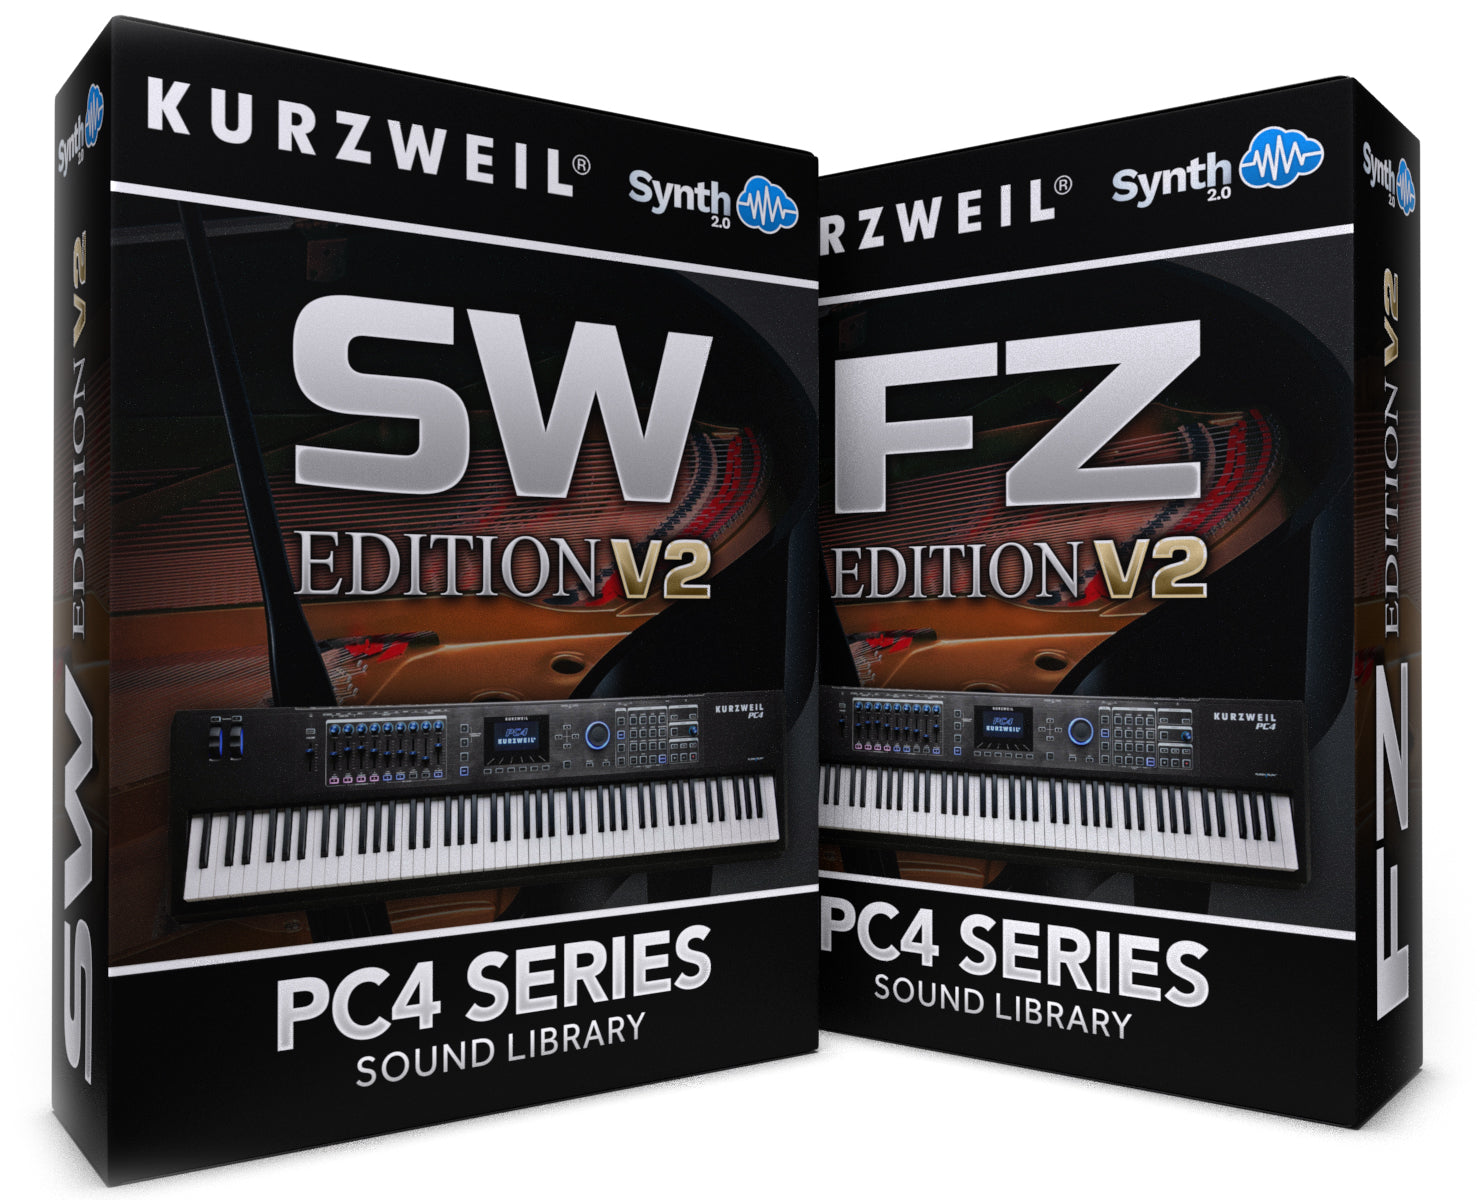 DRS054 - ( Bundle ) - SW Edition V2 + FZ Edition V2 - Kurzweil PC4 Series